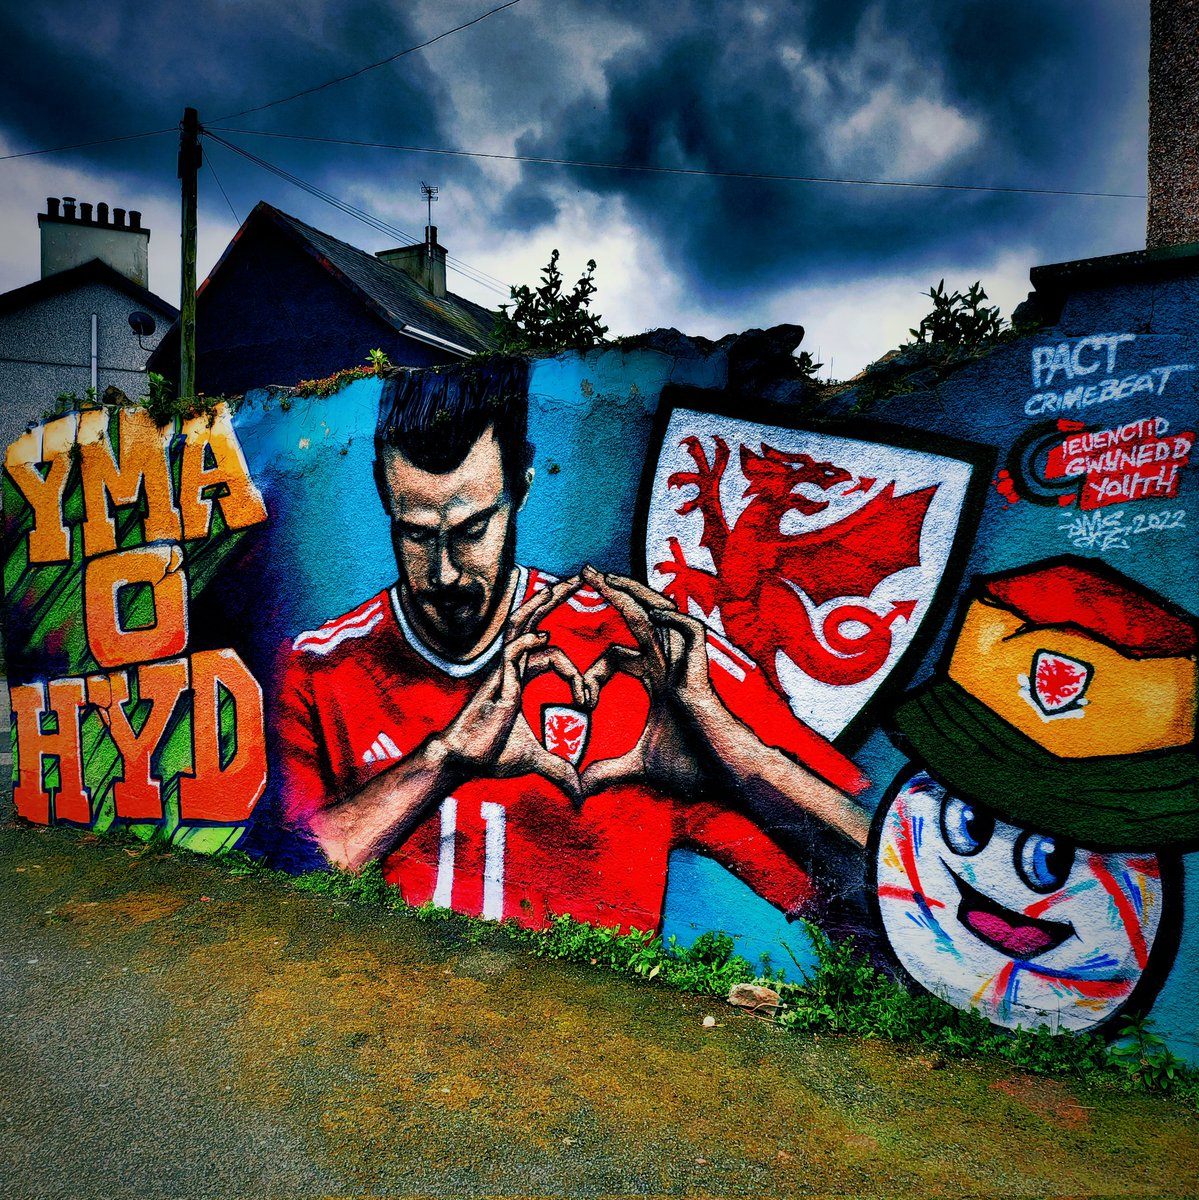 A Stunning Mural in Caernarfon, Featuring famous footballer Gareth Bale.

#GarethBale #Southampton #Tottenham #RealMadrid #LAFC #losangelesfc #wales #golf #football #soccer #laliga #premierleague #MLS #worldcup #euros #Caernarfon #visitwales #visitcaernarfon #Mural #bale #goat